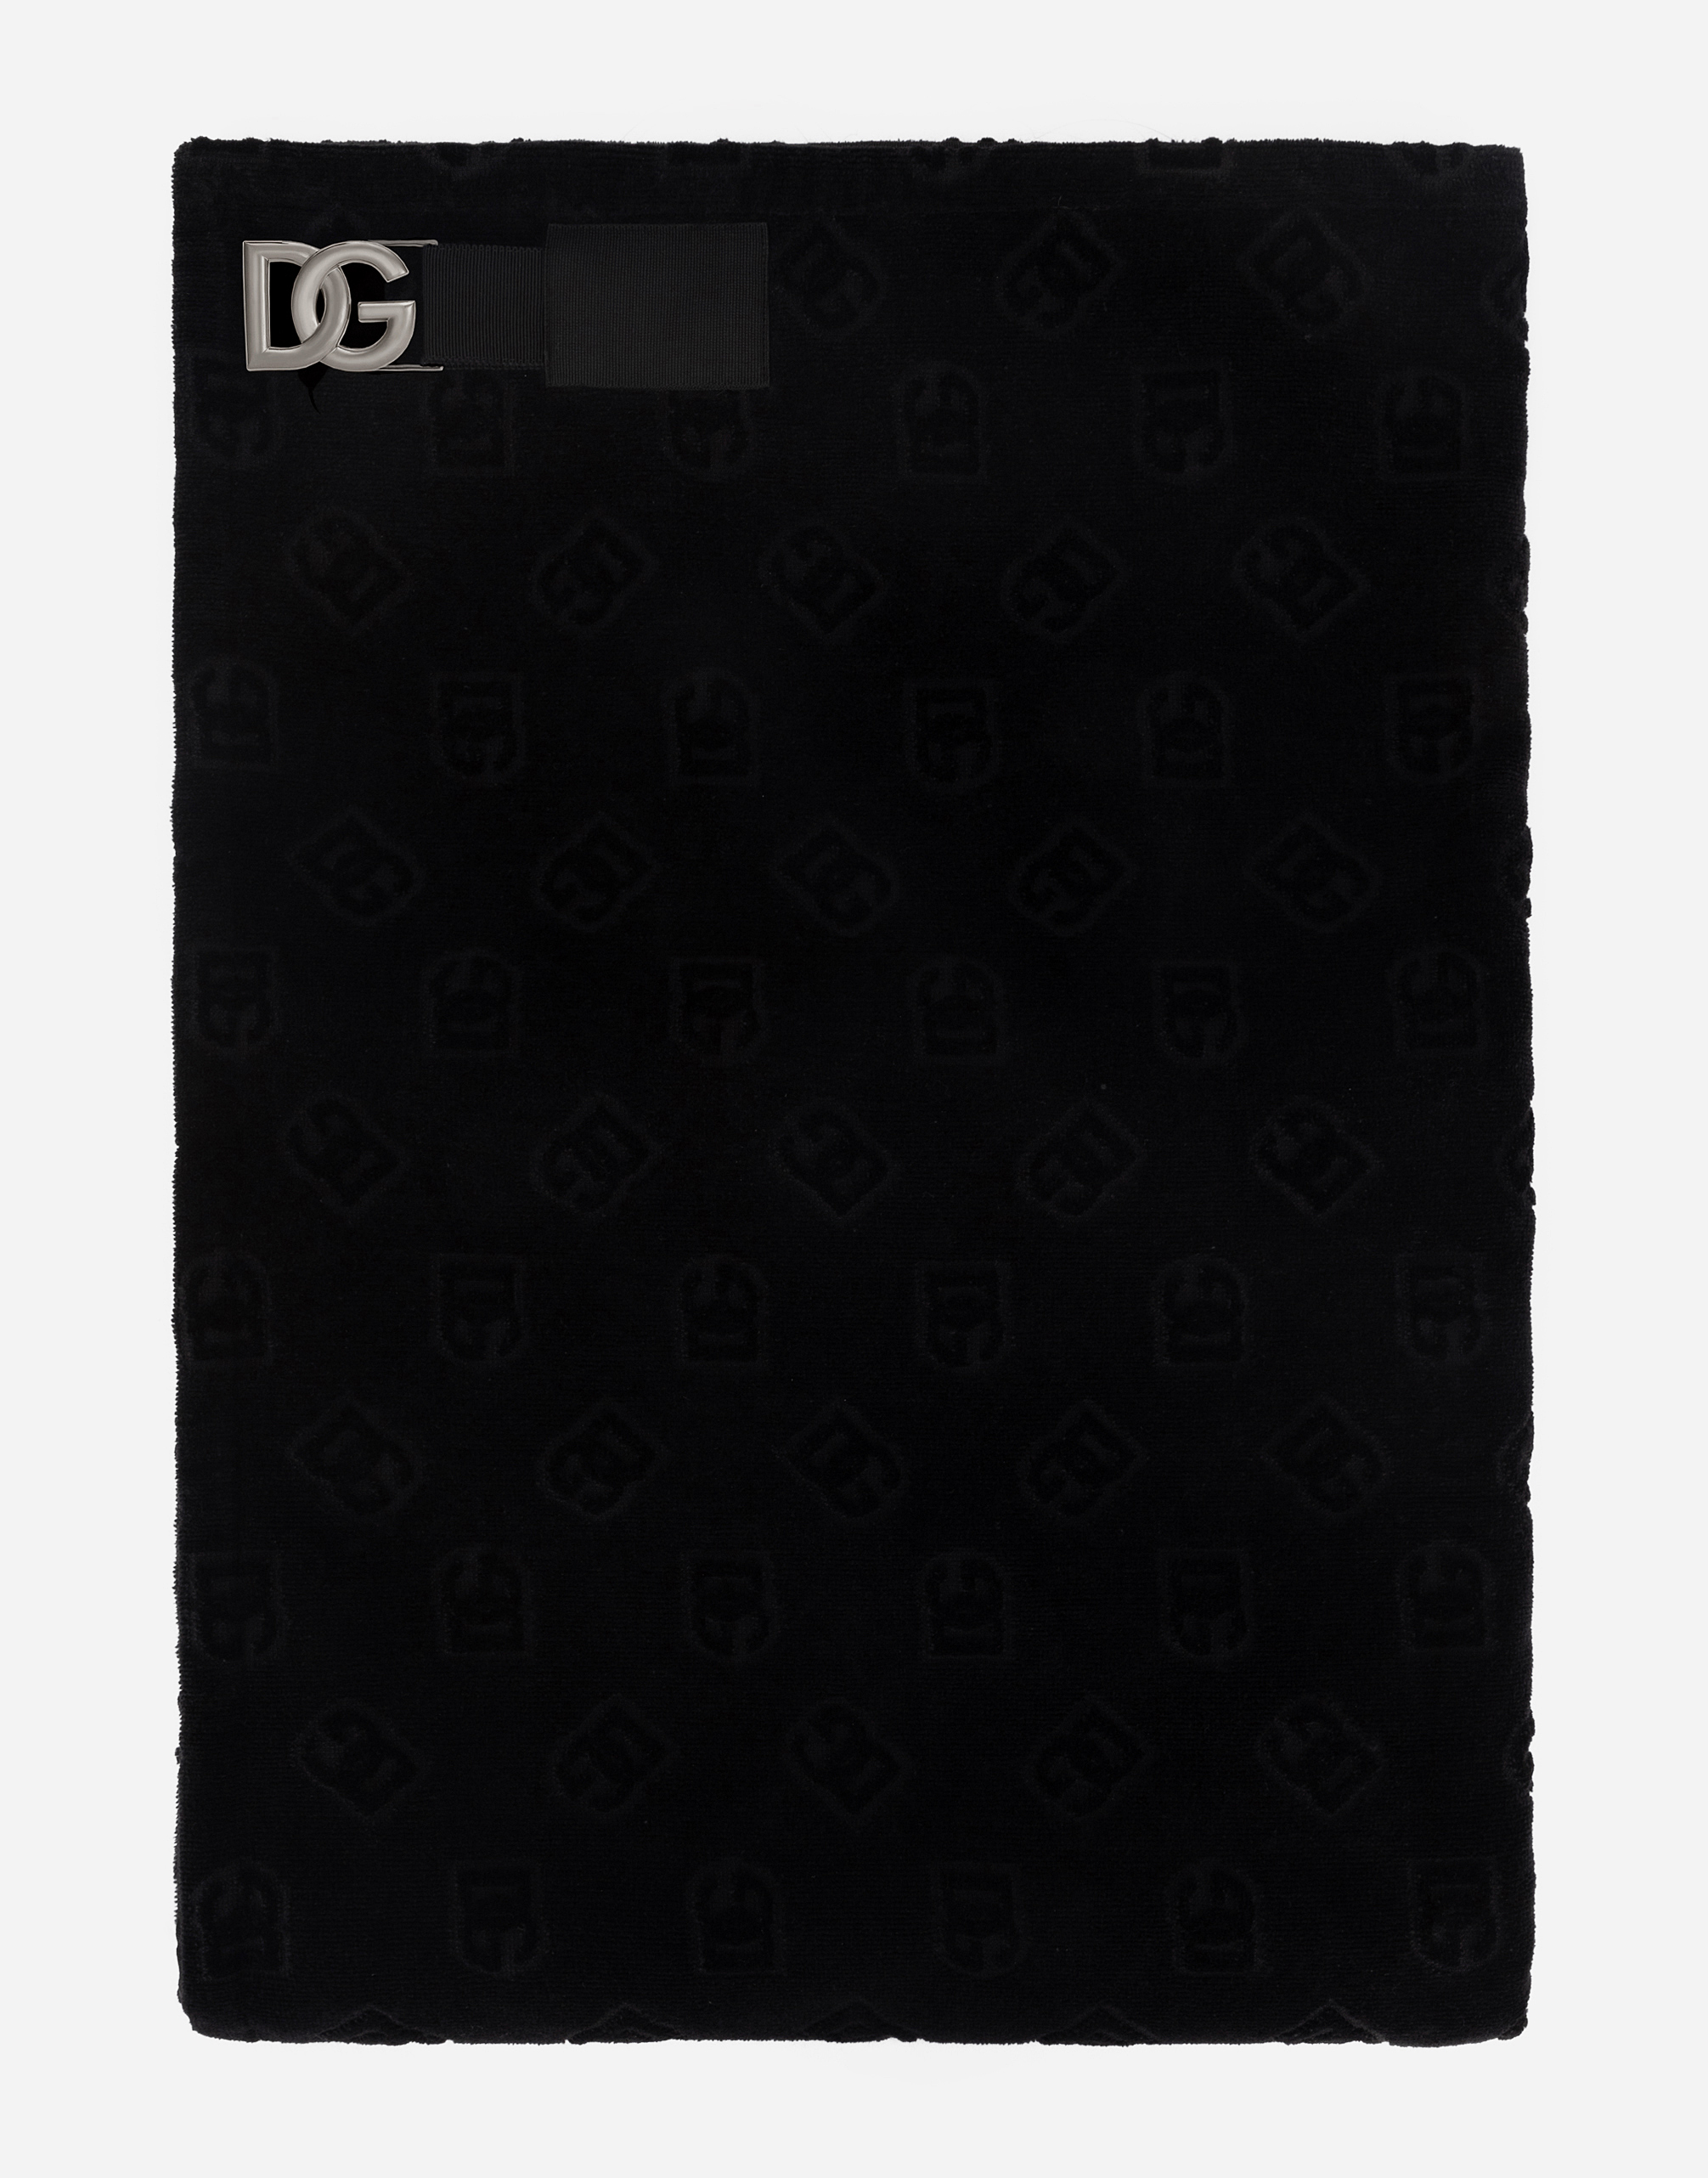 Dolce & Gabbana Cotton Jacquard Beach Towel With Dg Monogram In Black